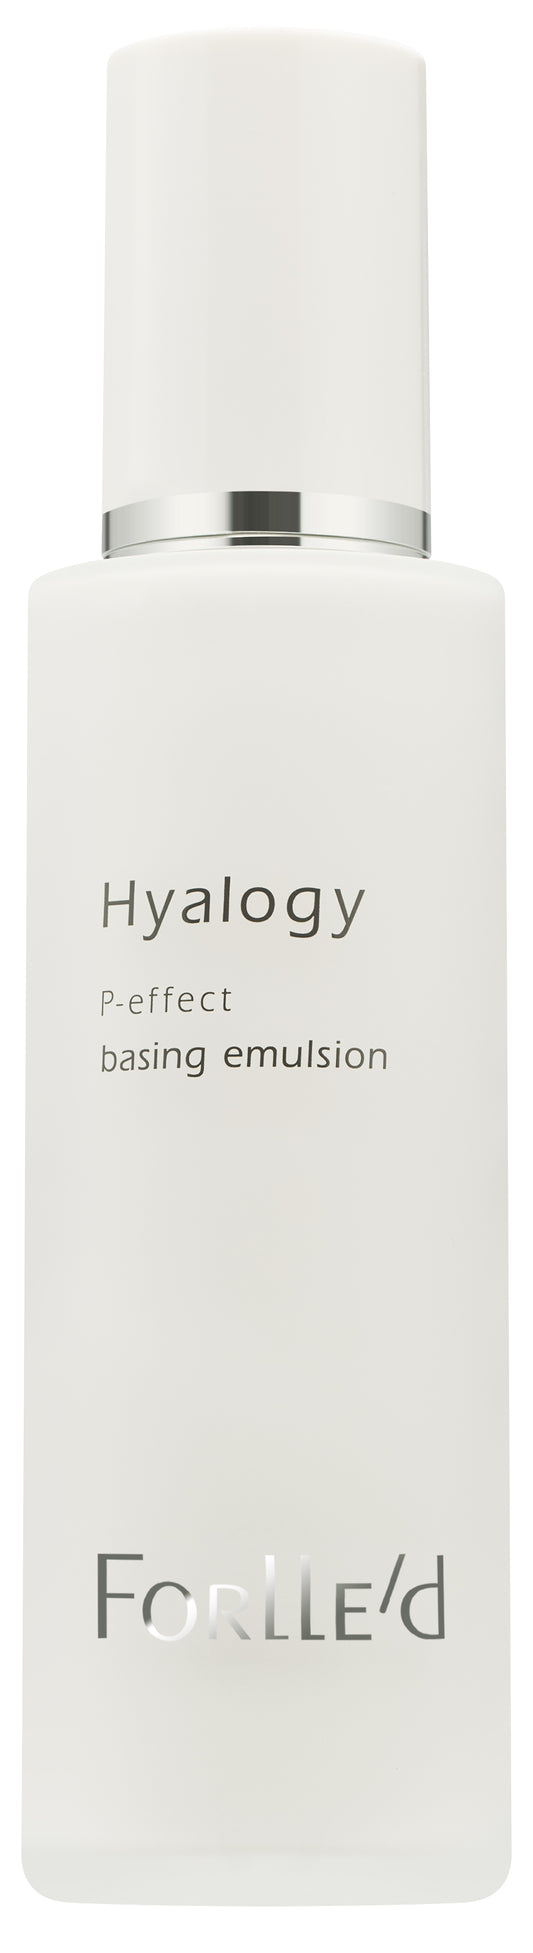 Hyalogy P-effect Basing Emulsion